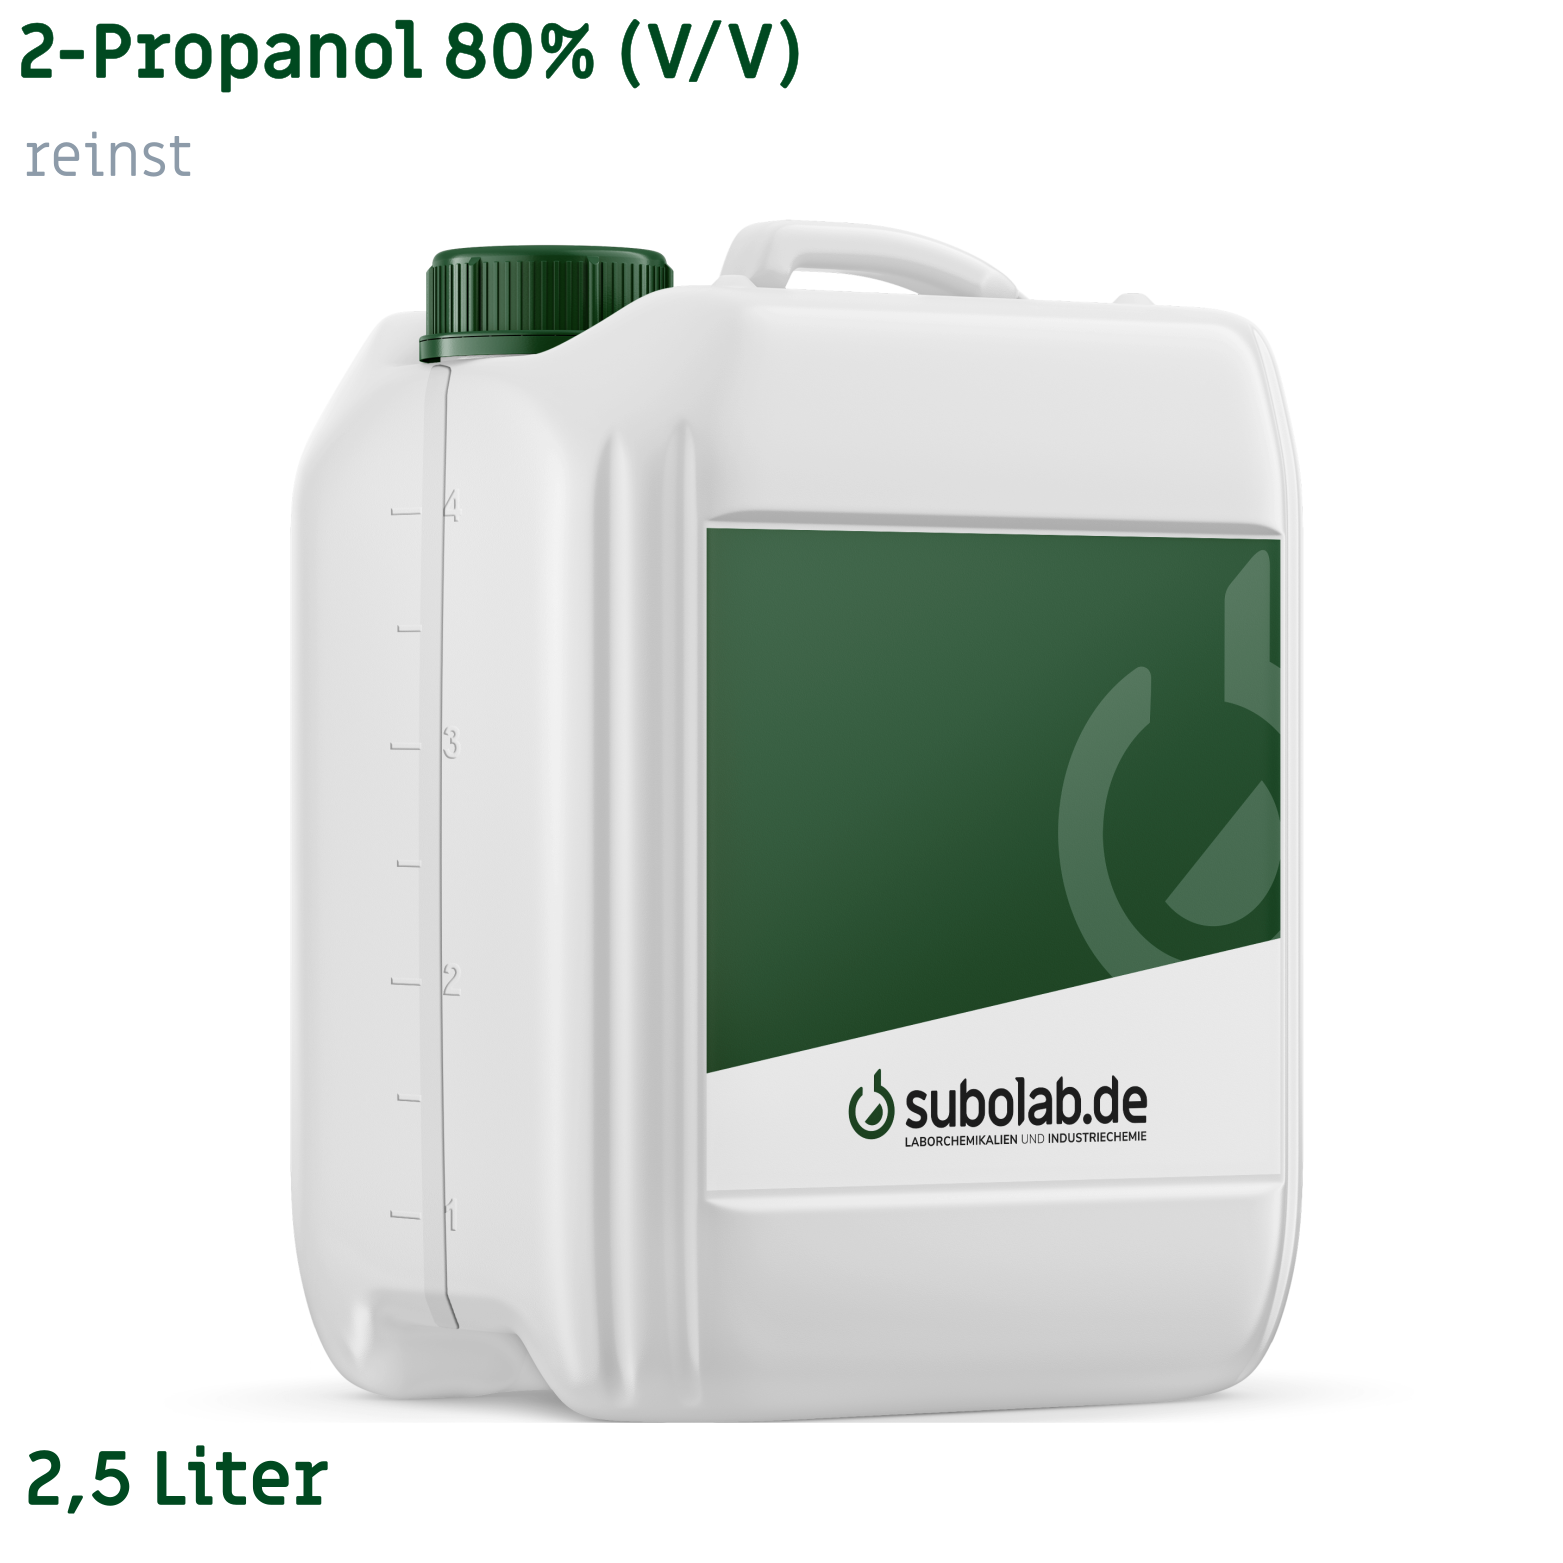 Bild von 2-Propanol 80% (V/V) reinst (2,5 Liter)